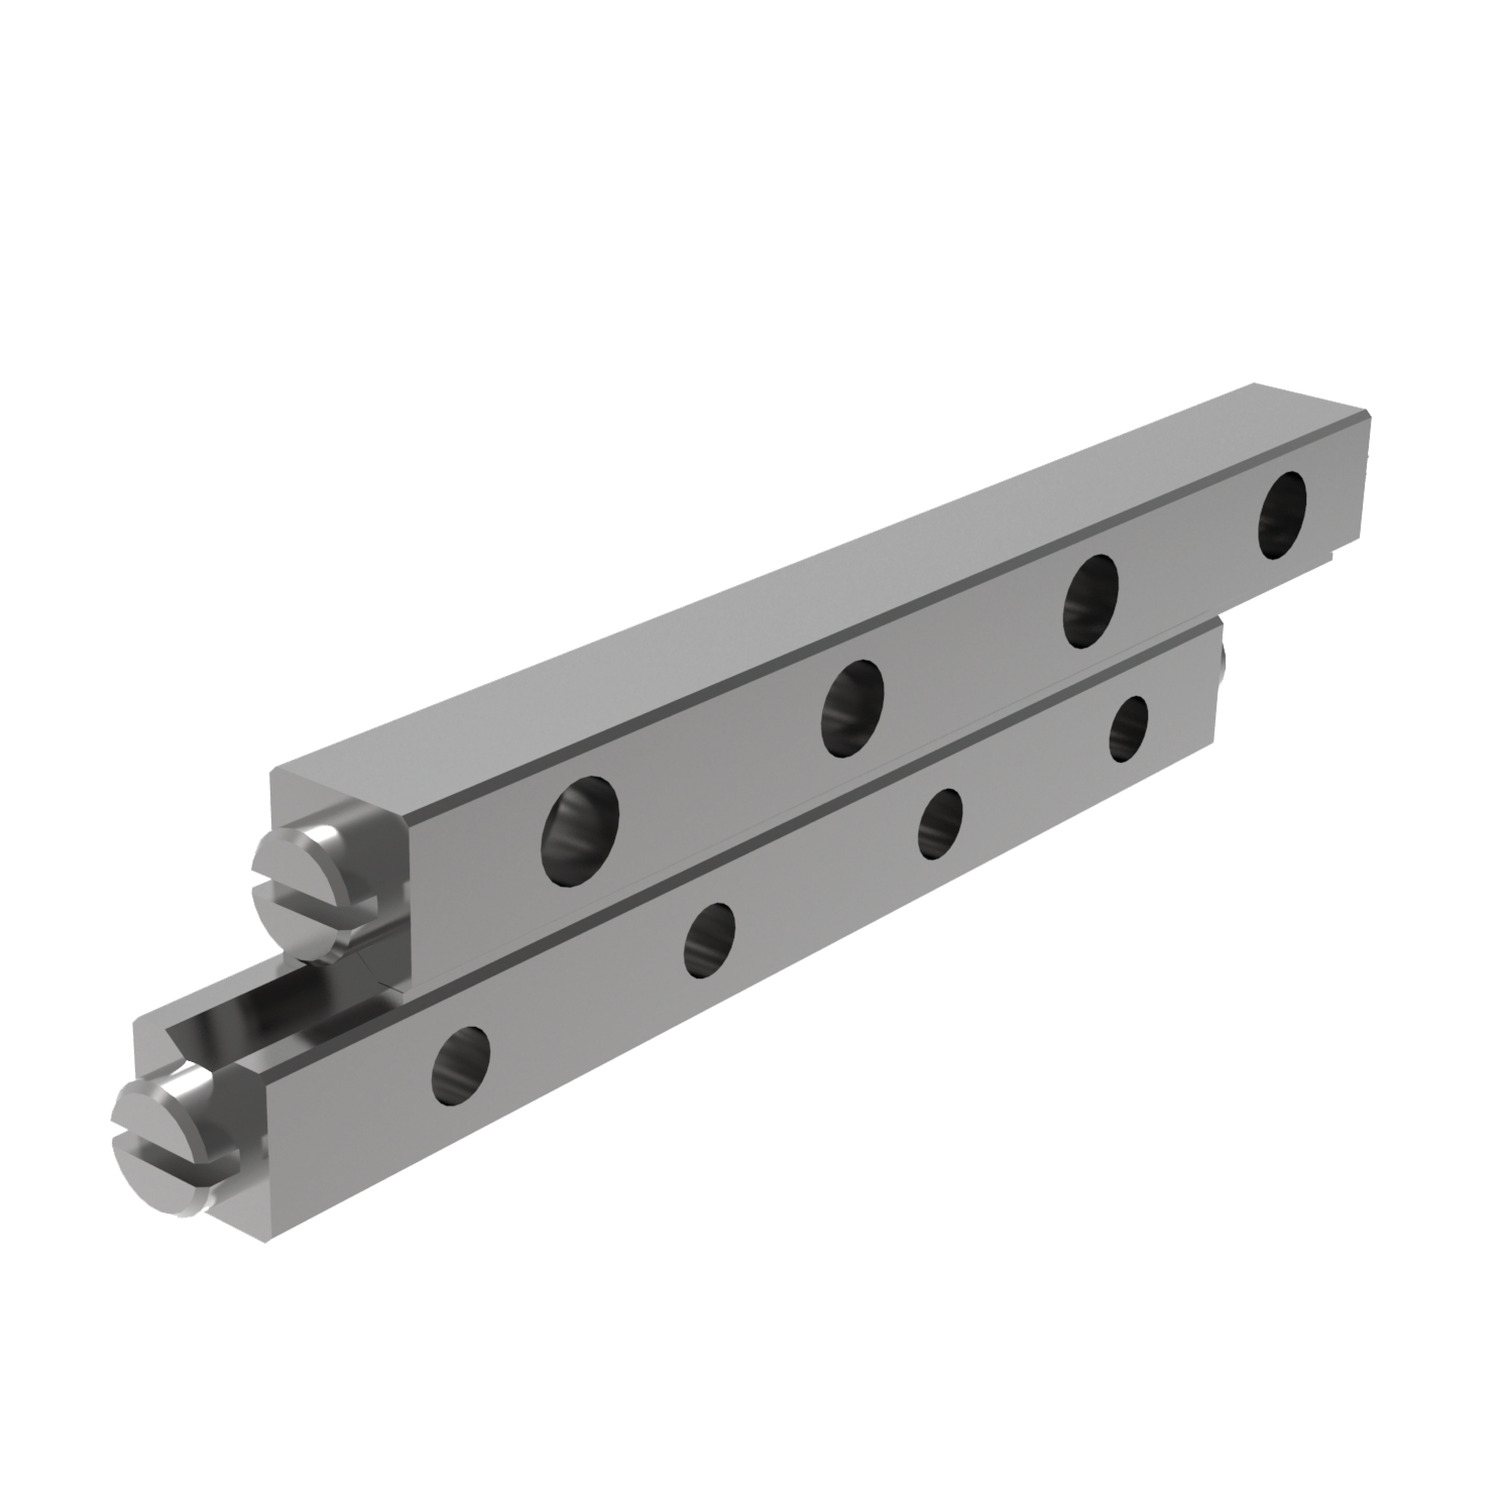 L1001.01-020 Cross roller rail sets stainless size 1x Standard linear bearings sets consists of: 4 pcs. Rails, 2 pcs. roller cages, 8 pcs. end screws